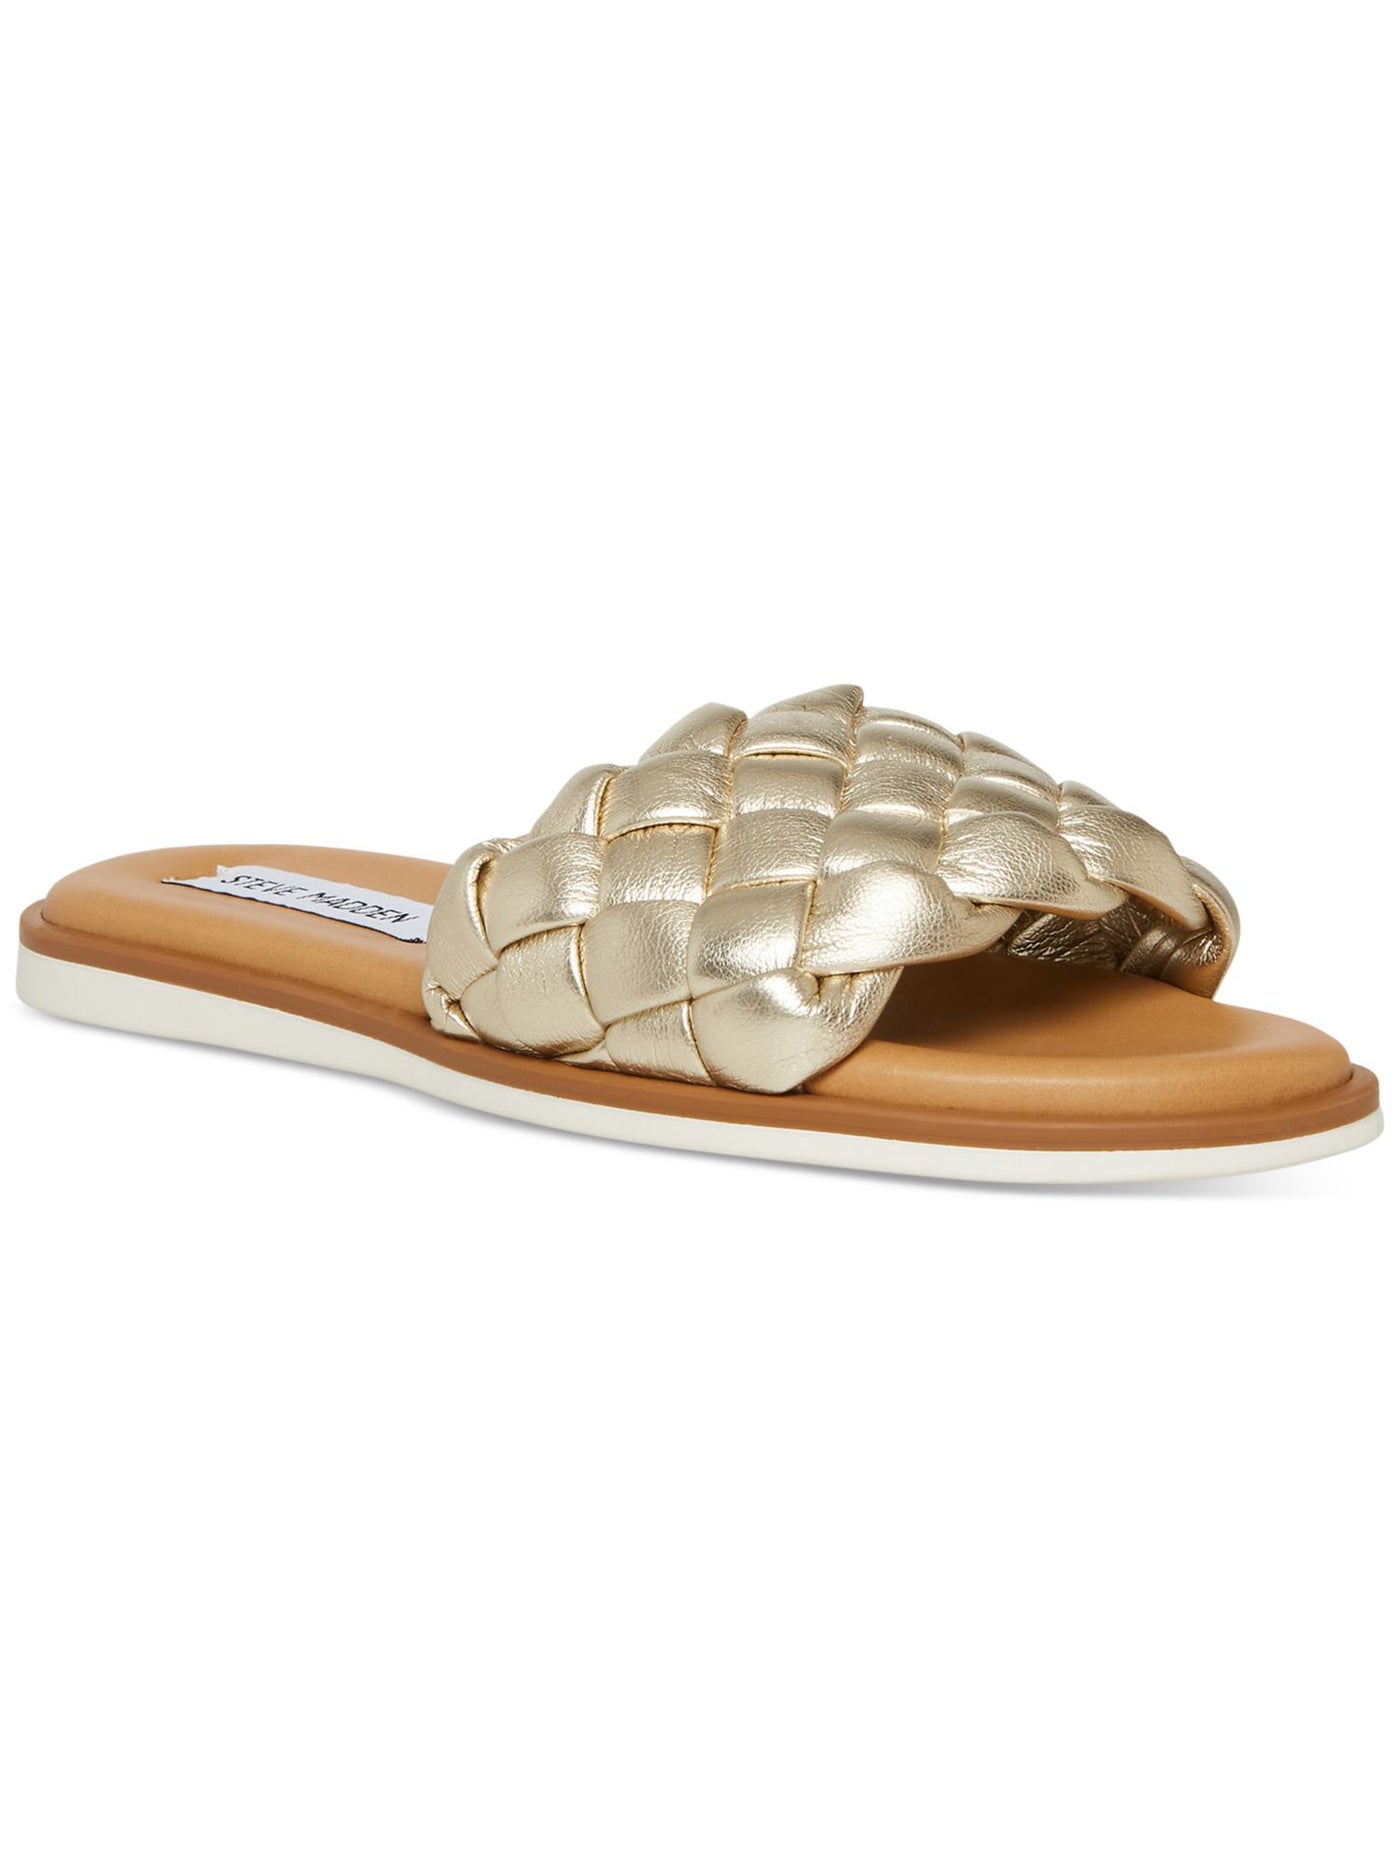 STEVE MADDEN Womens Gold 01/2" Platform Metallic Cushioned Woven Paislee Round Toe Platform Slip On Sandals Shoes 11 M